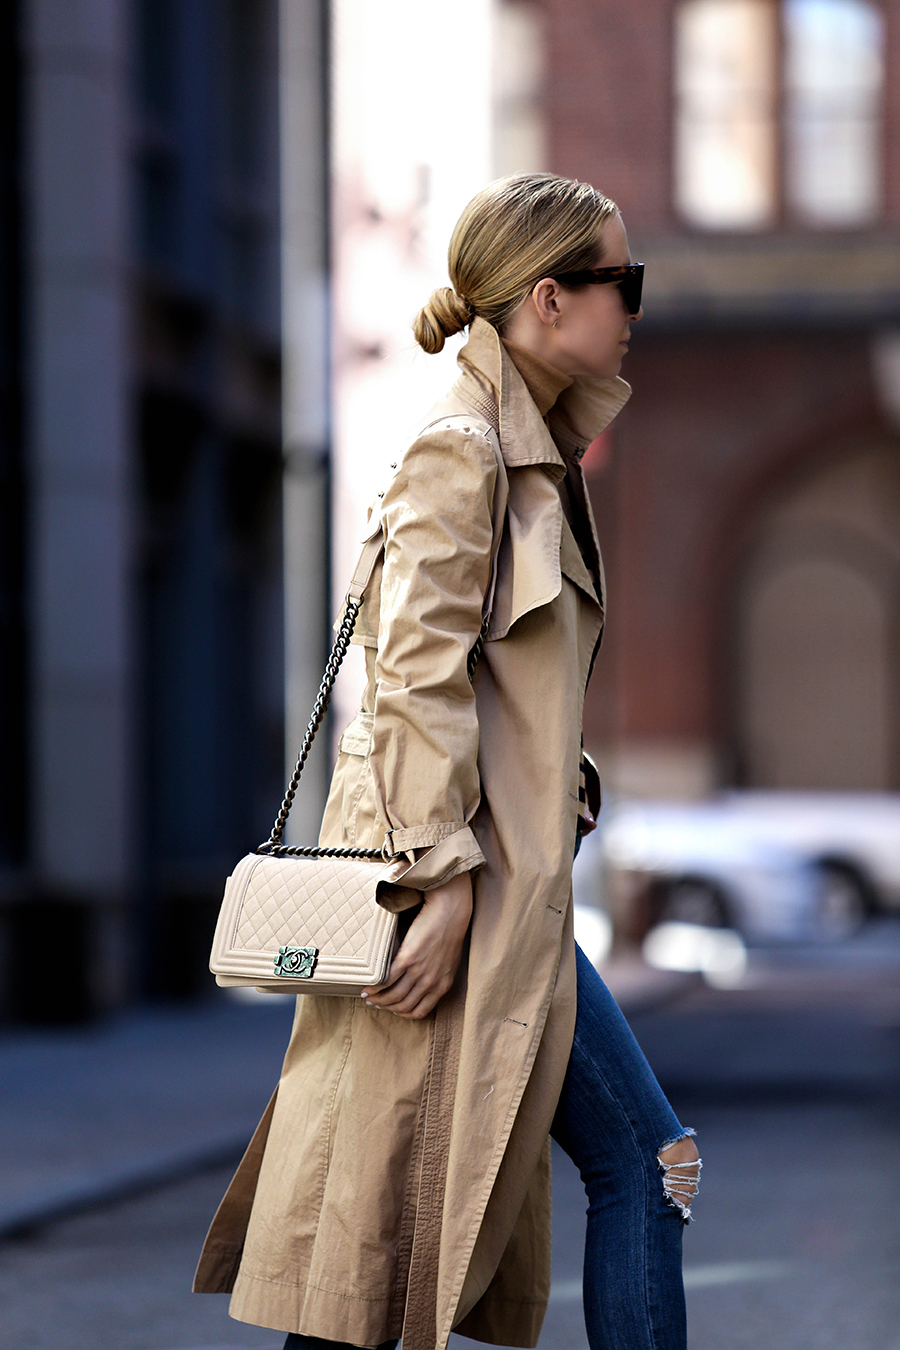 Helena Glazer of Brooklyn Blonde wearing a trench coat by La Vie Rebecca Taylor